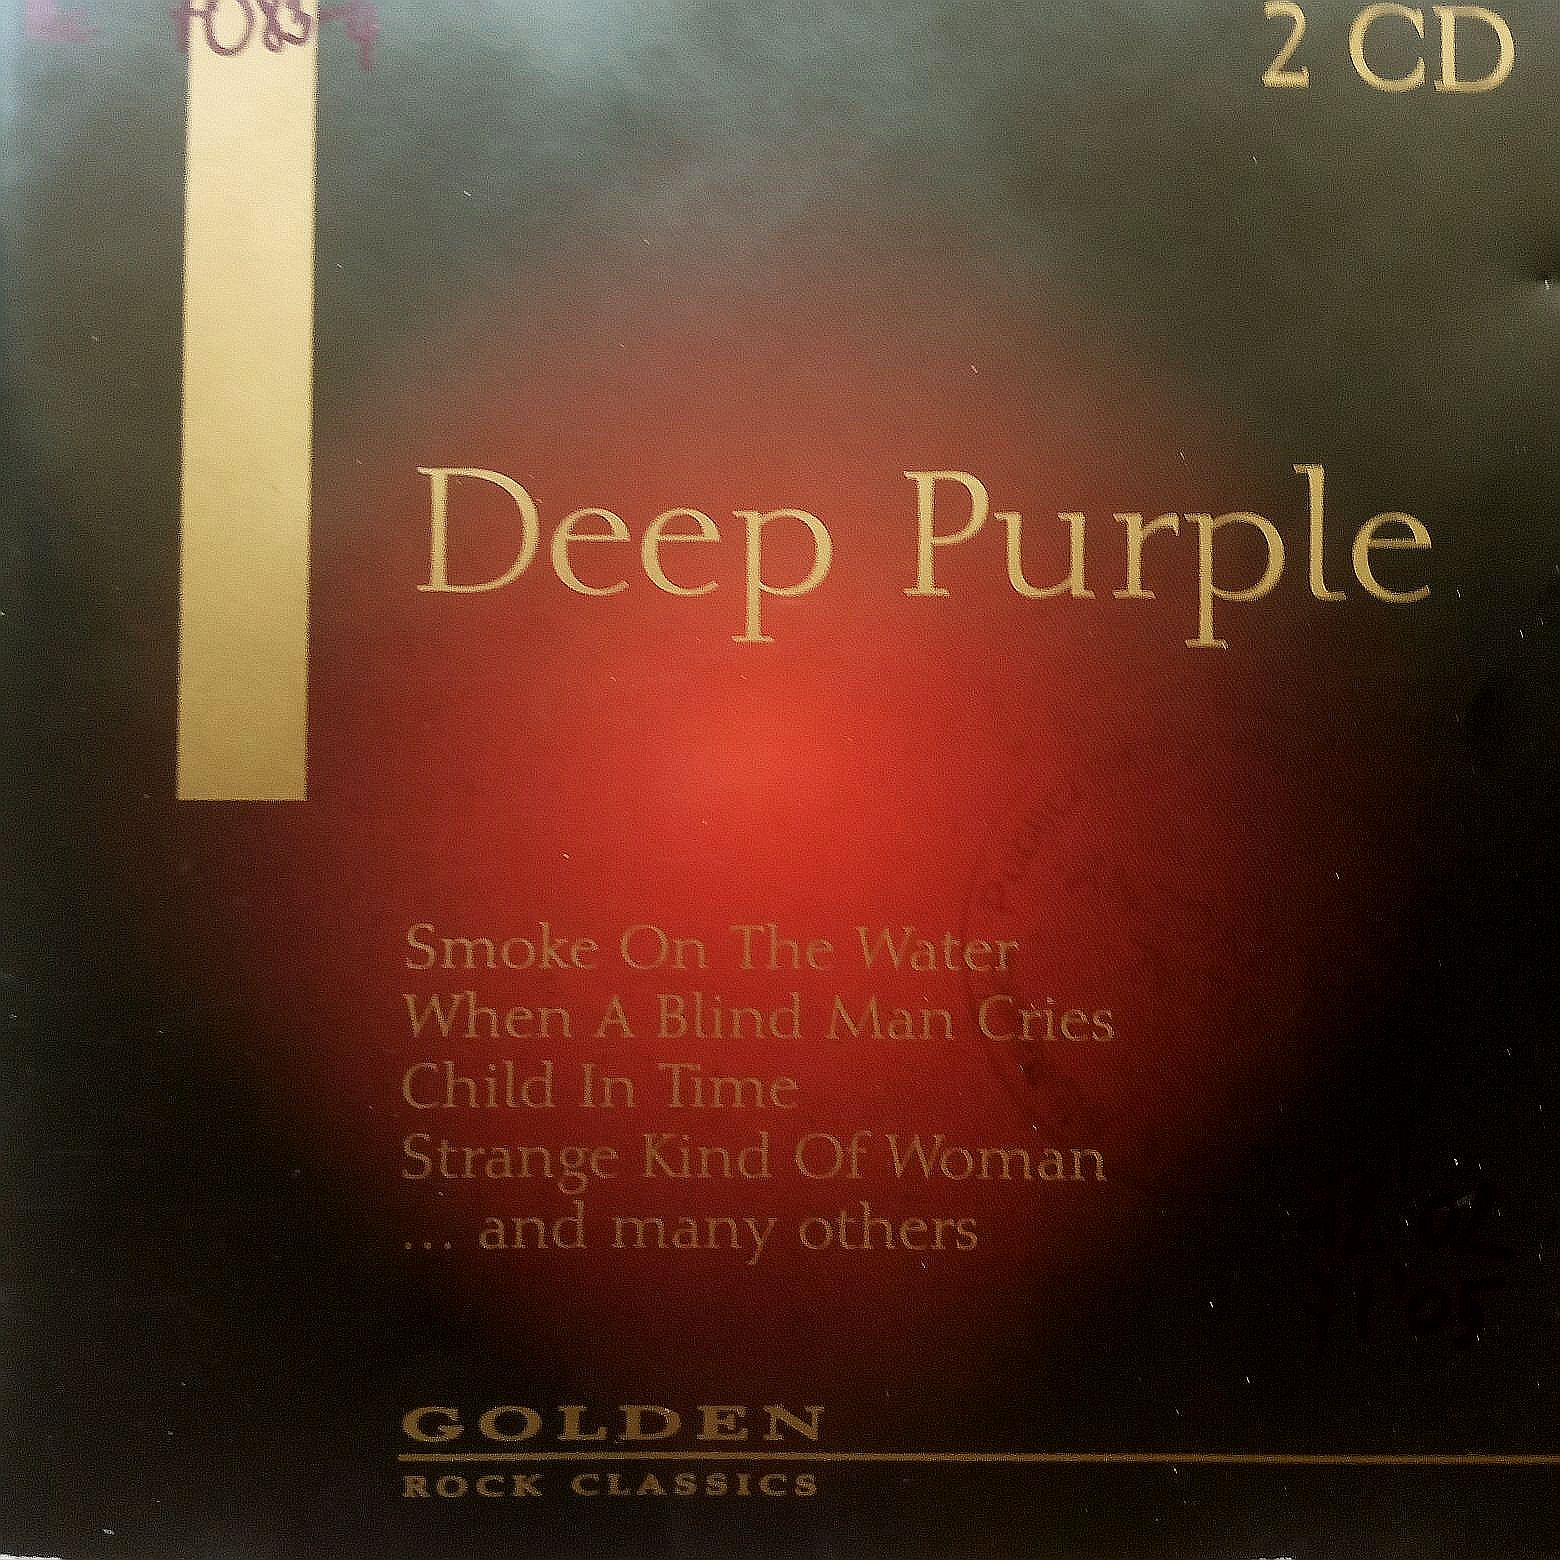 DEEP PURPLE – Deep Purple. Golden Rock Classics